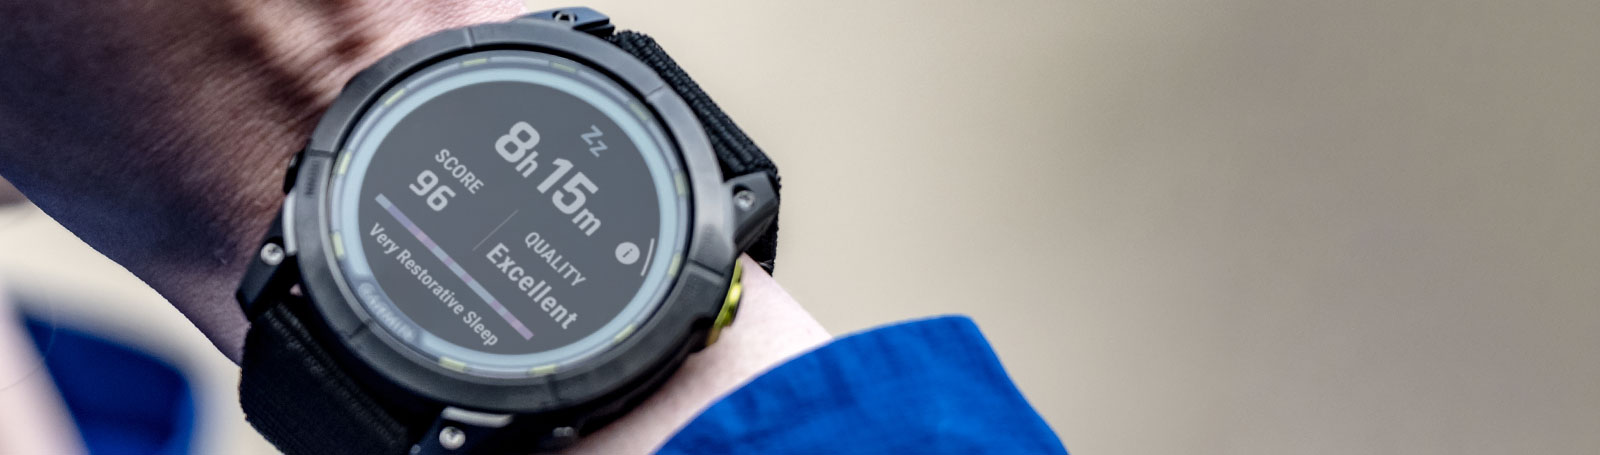 5-Enduro-2-smart-watch-Garmin